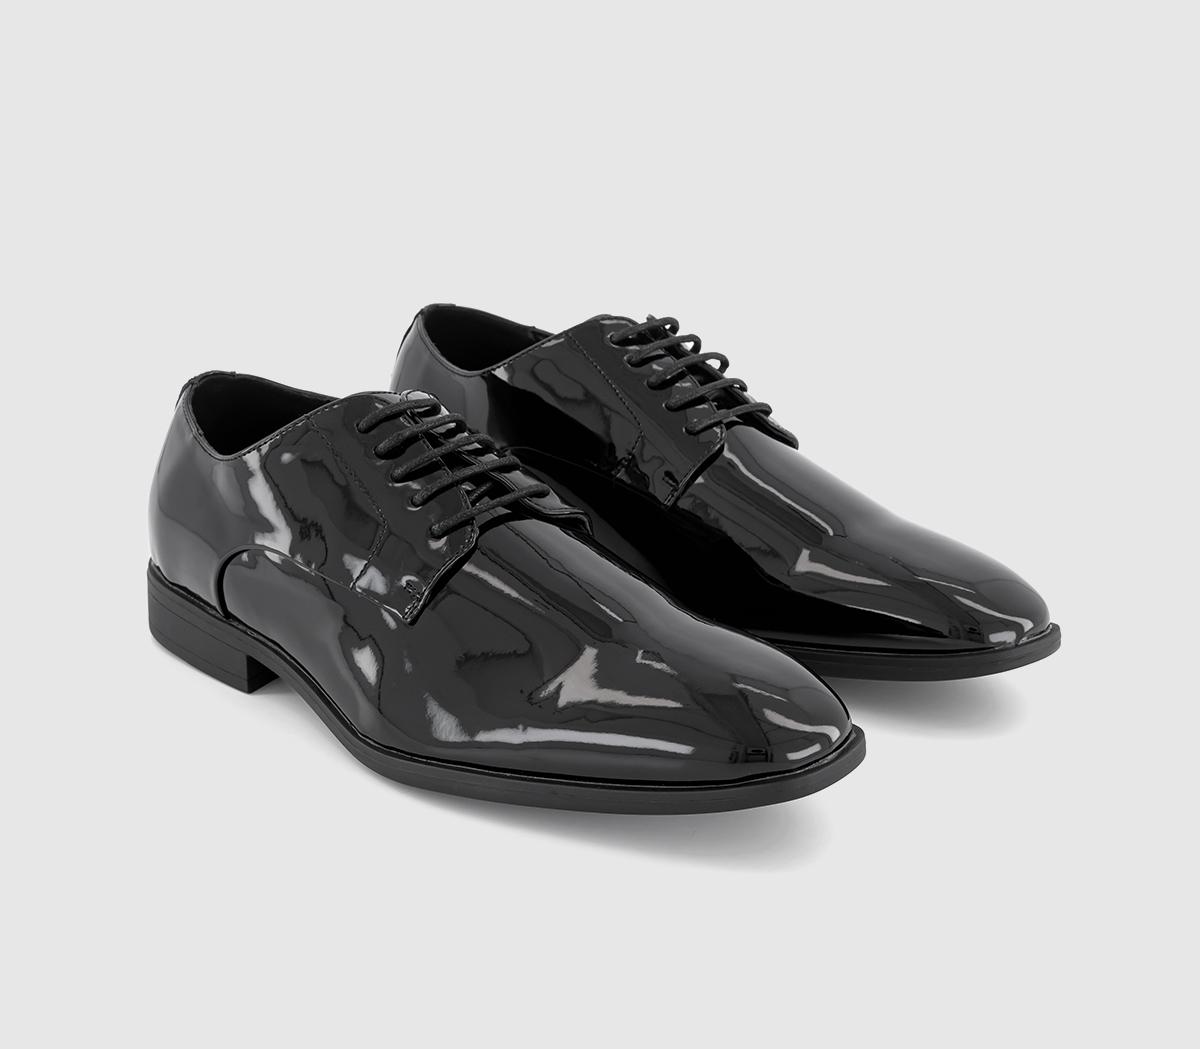 OFFICE Mens Moreland Patent Derby Shoes Black, 8